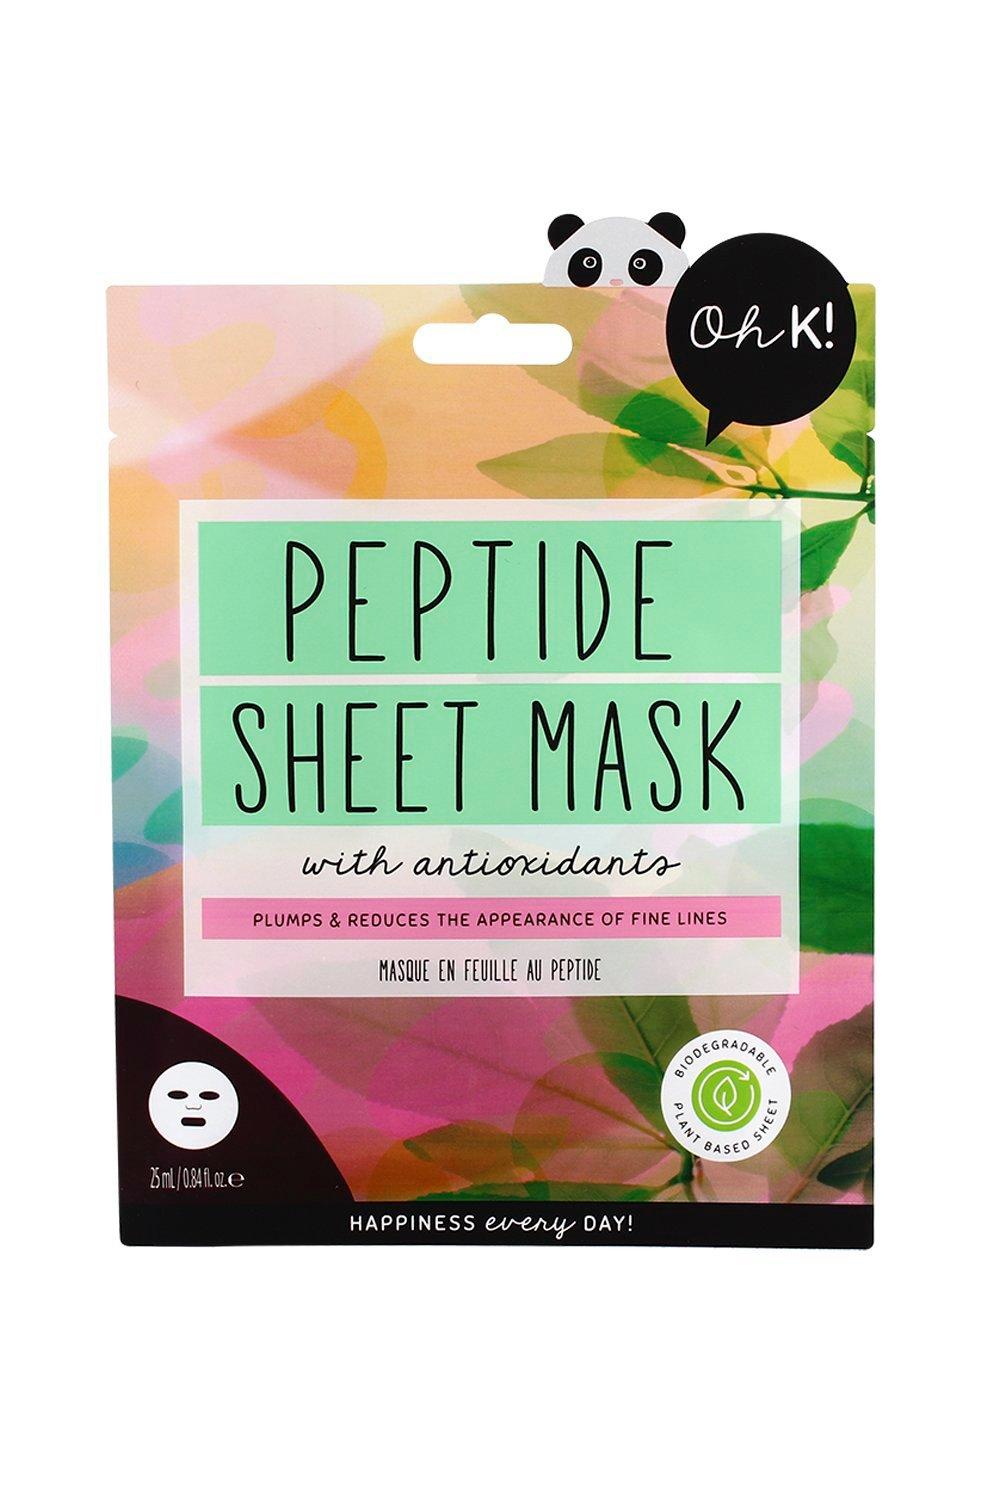 peptide sheet mask